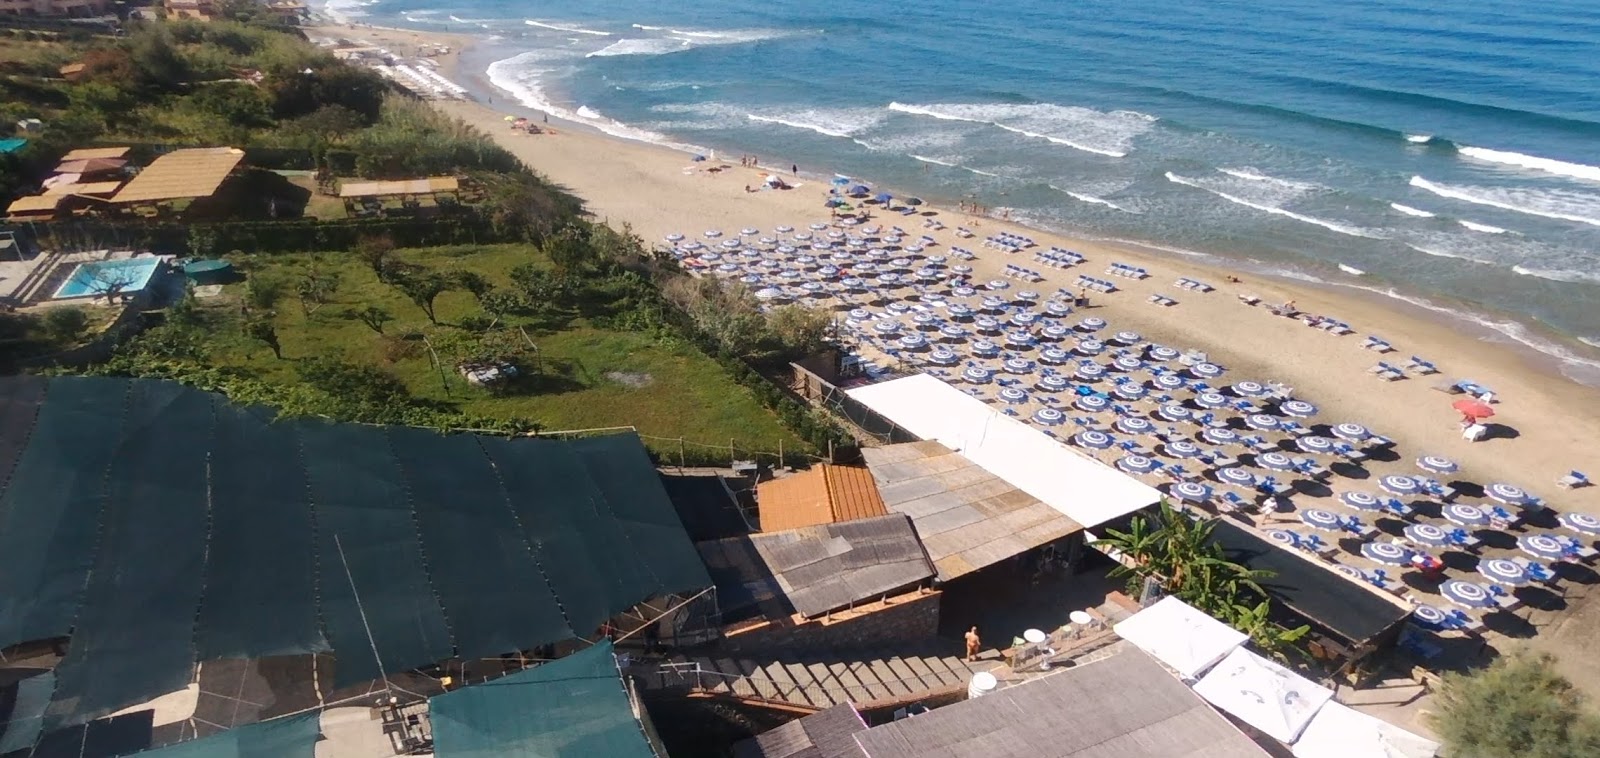 Photo of Acciaroli Beach beach resort area